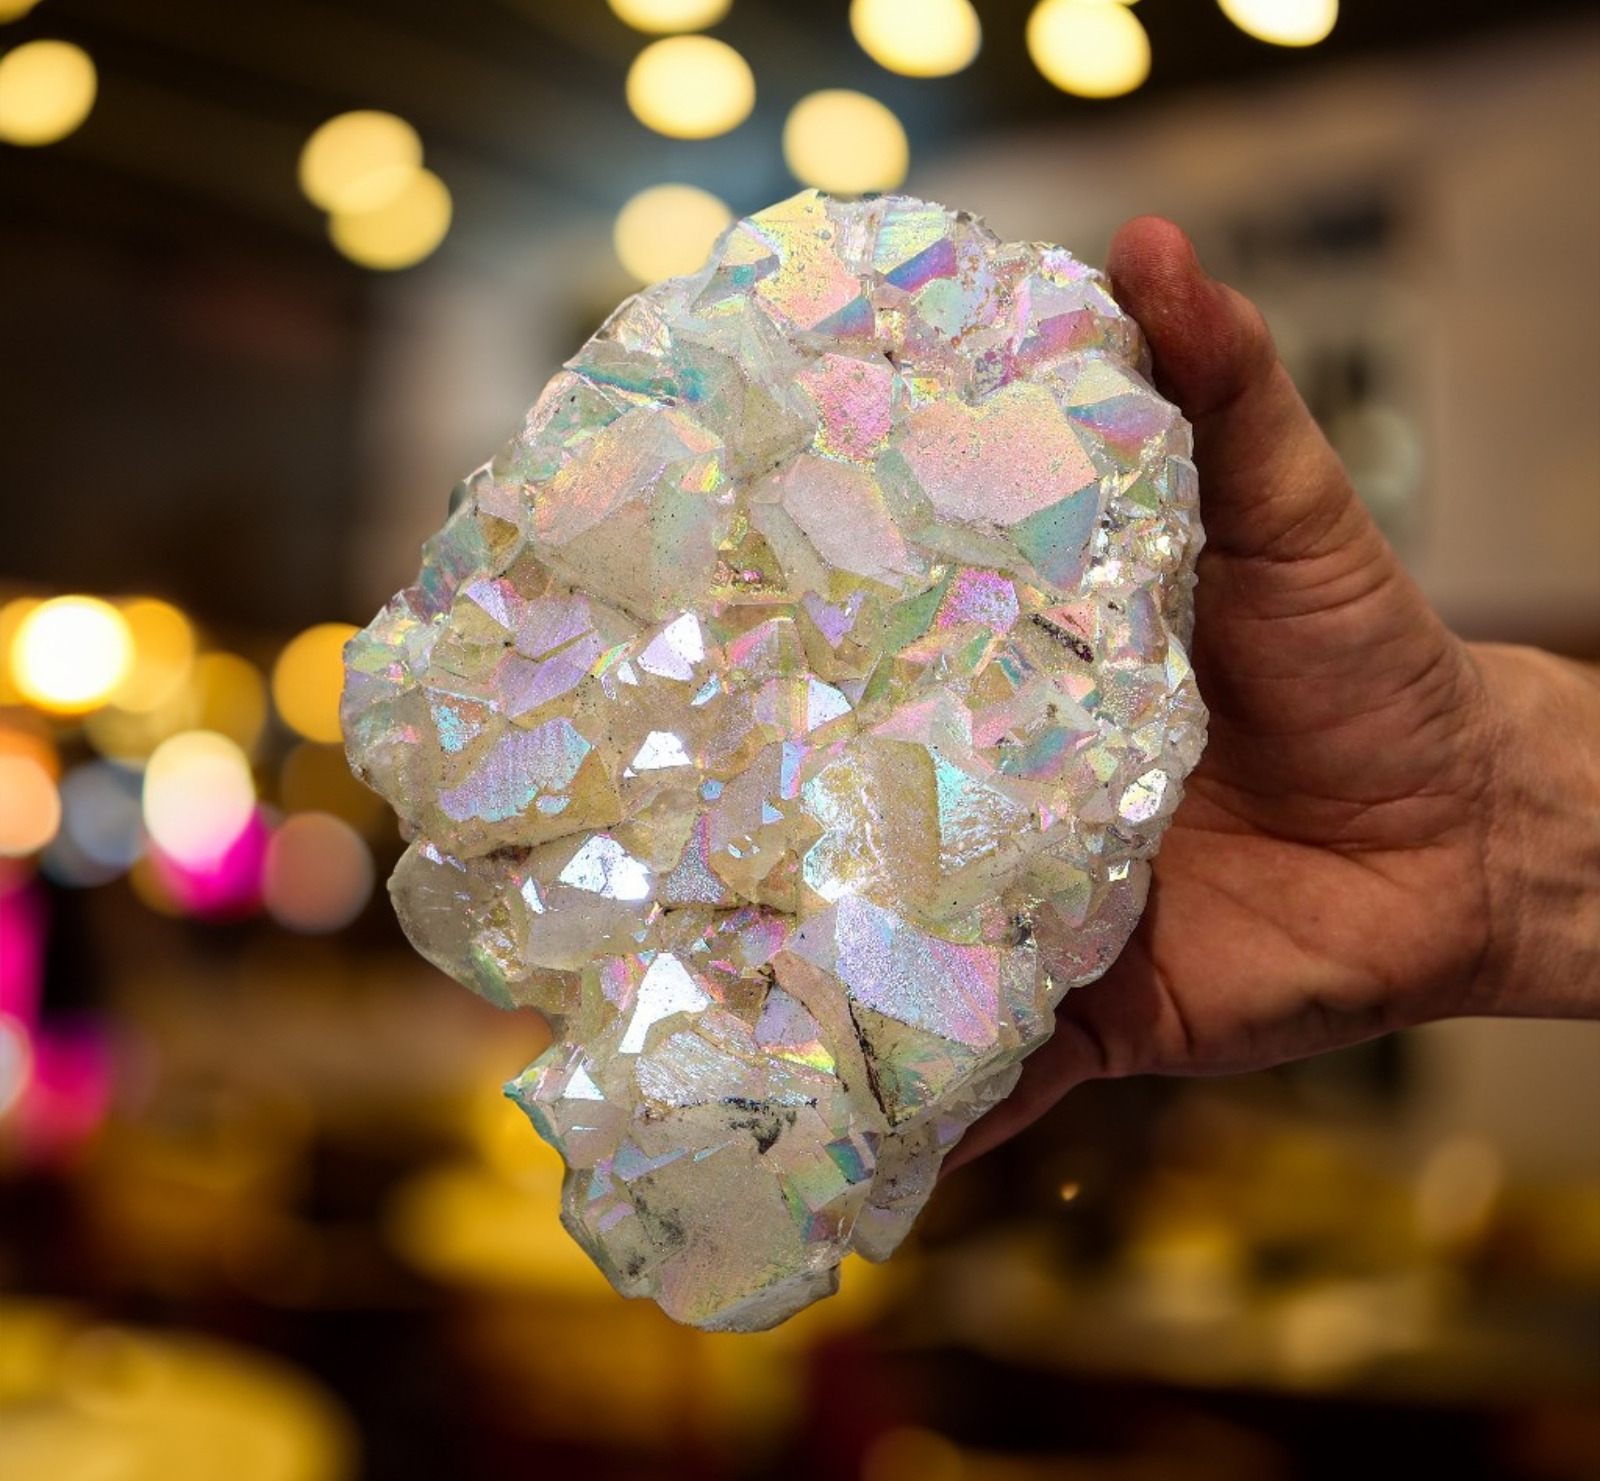 Stunning Rare Angel Aura Quartz Crystal Cluster Minerals Specimen - 1690 Grams